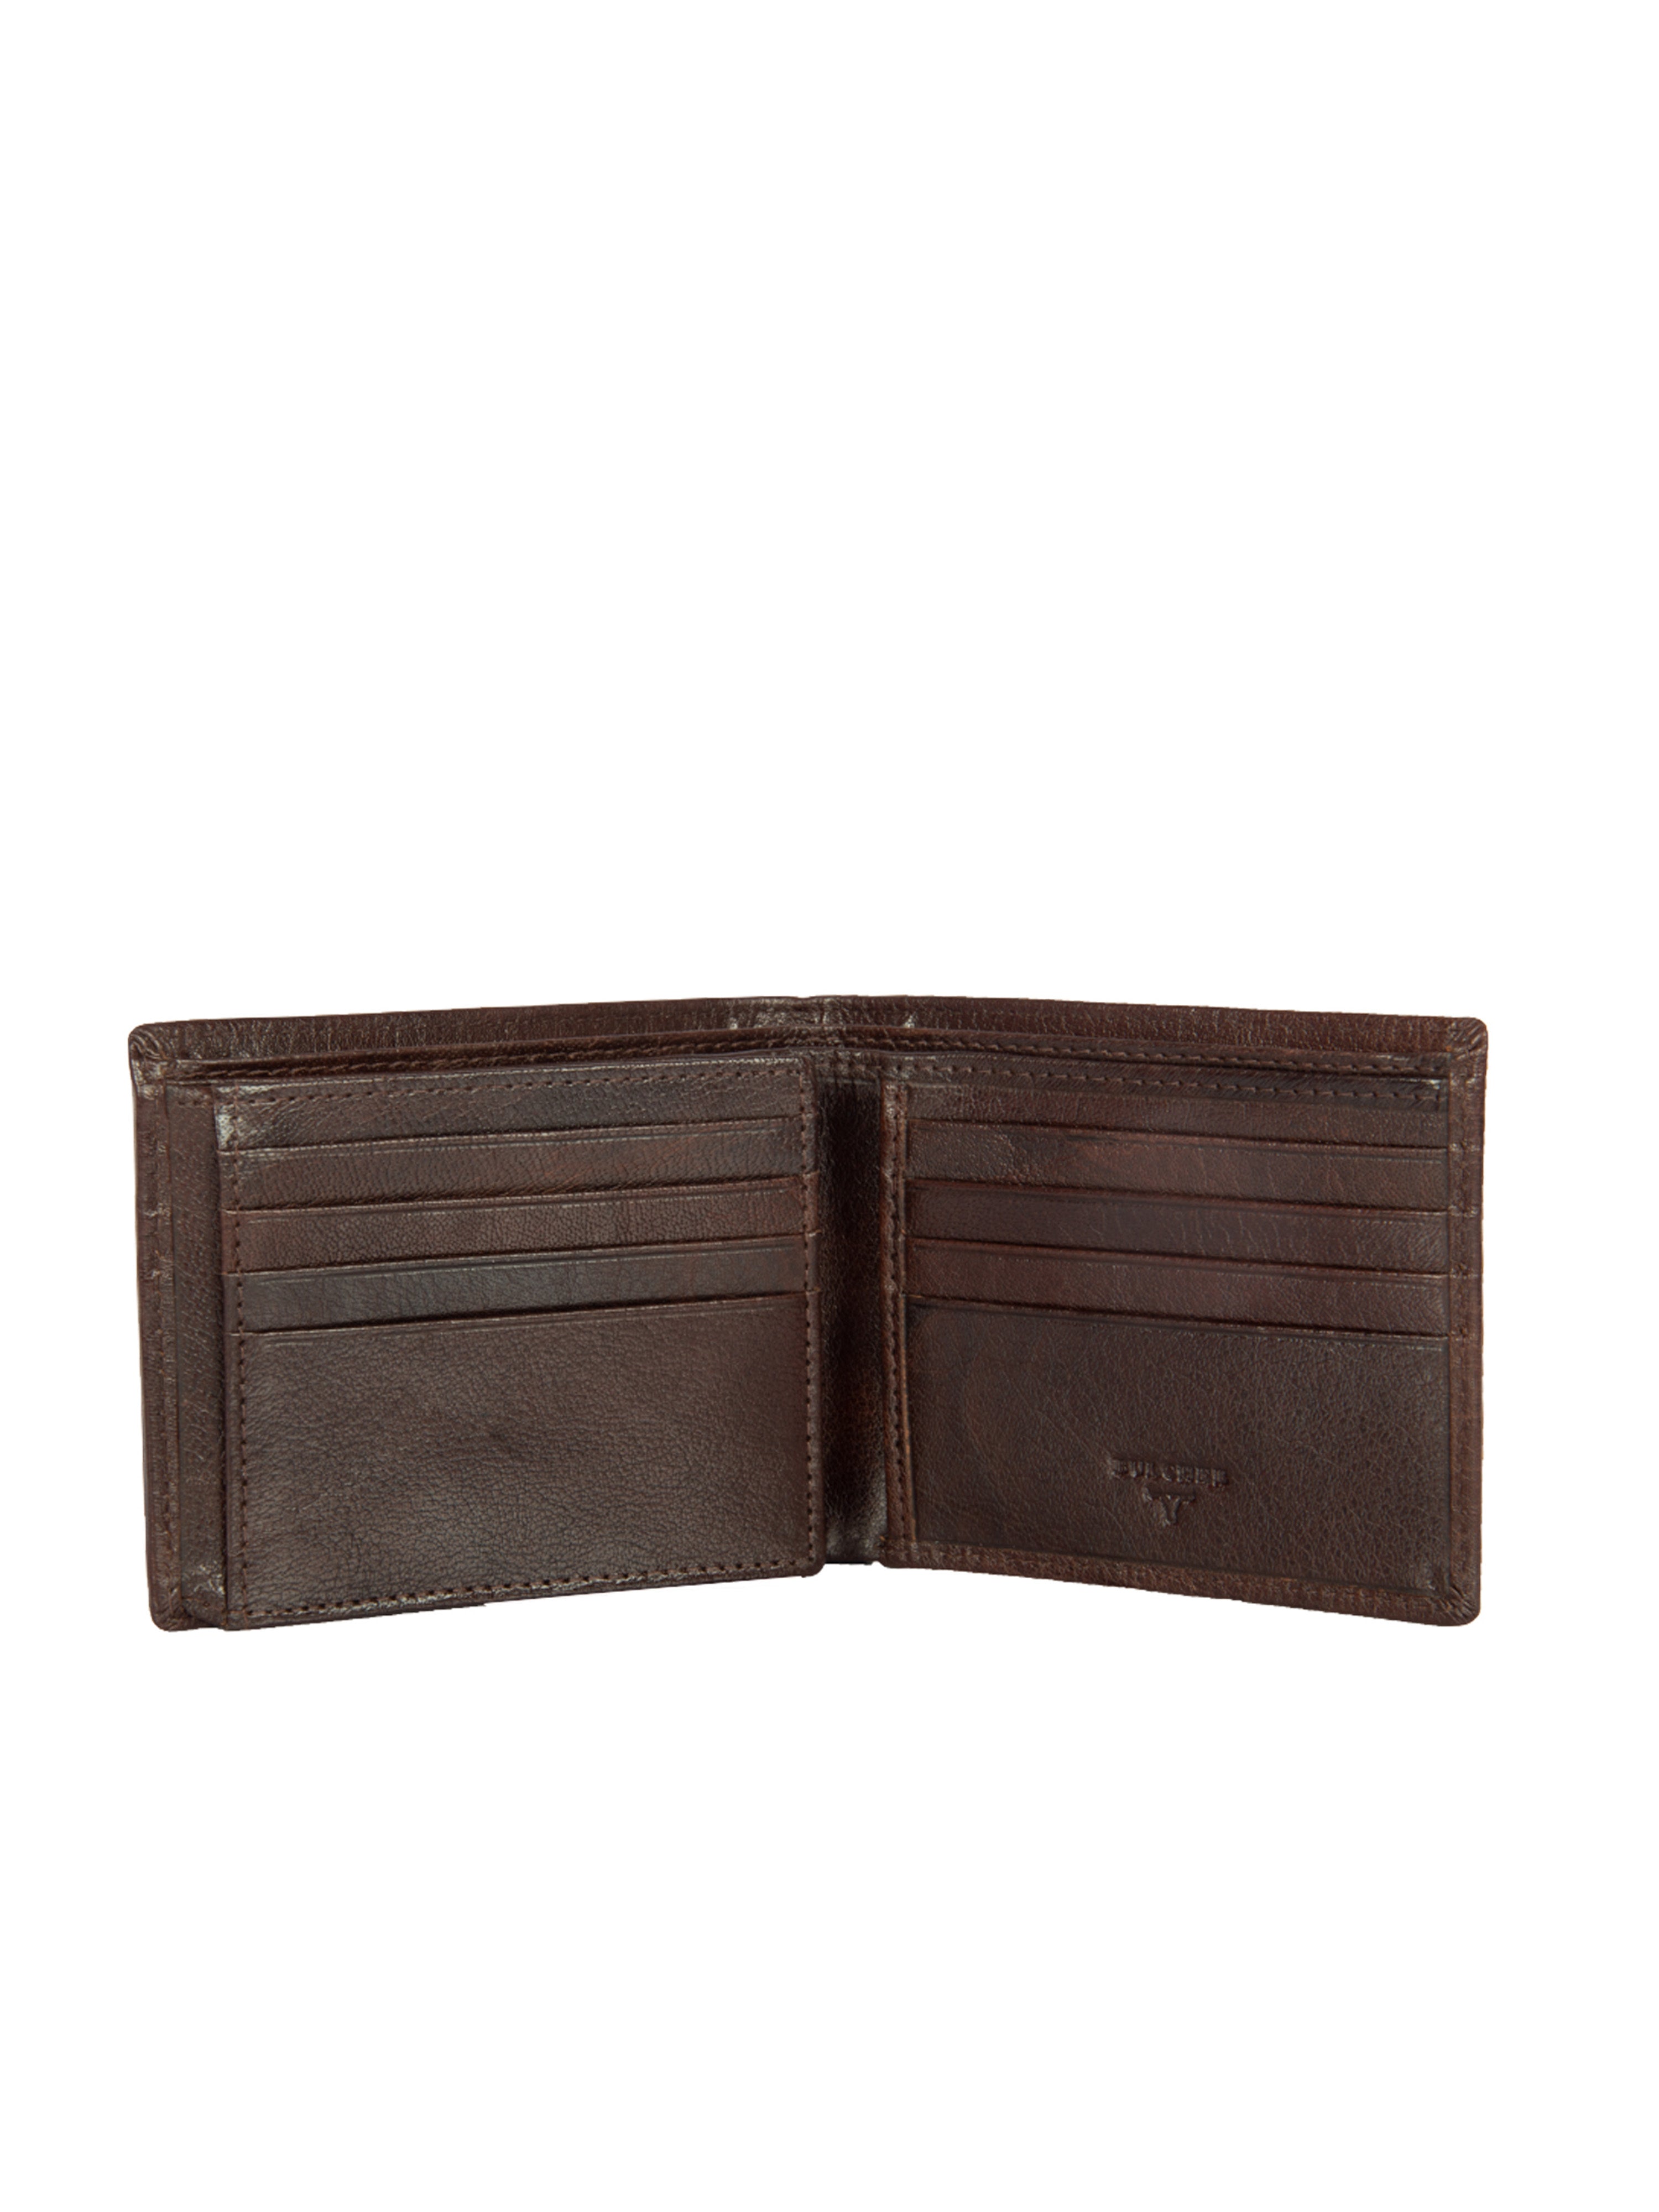 Bulchee Men Brown Genuine Leather Wallet | BUL914W